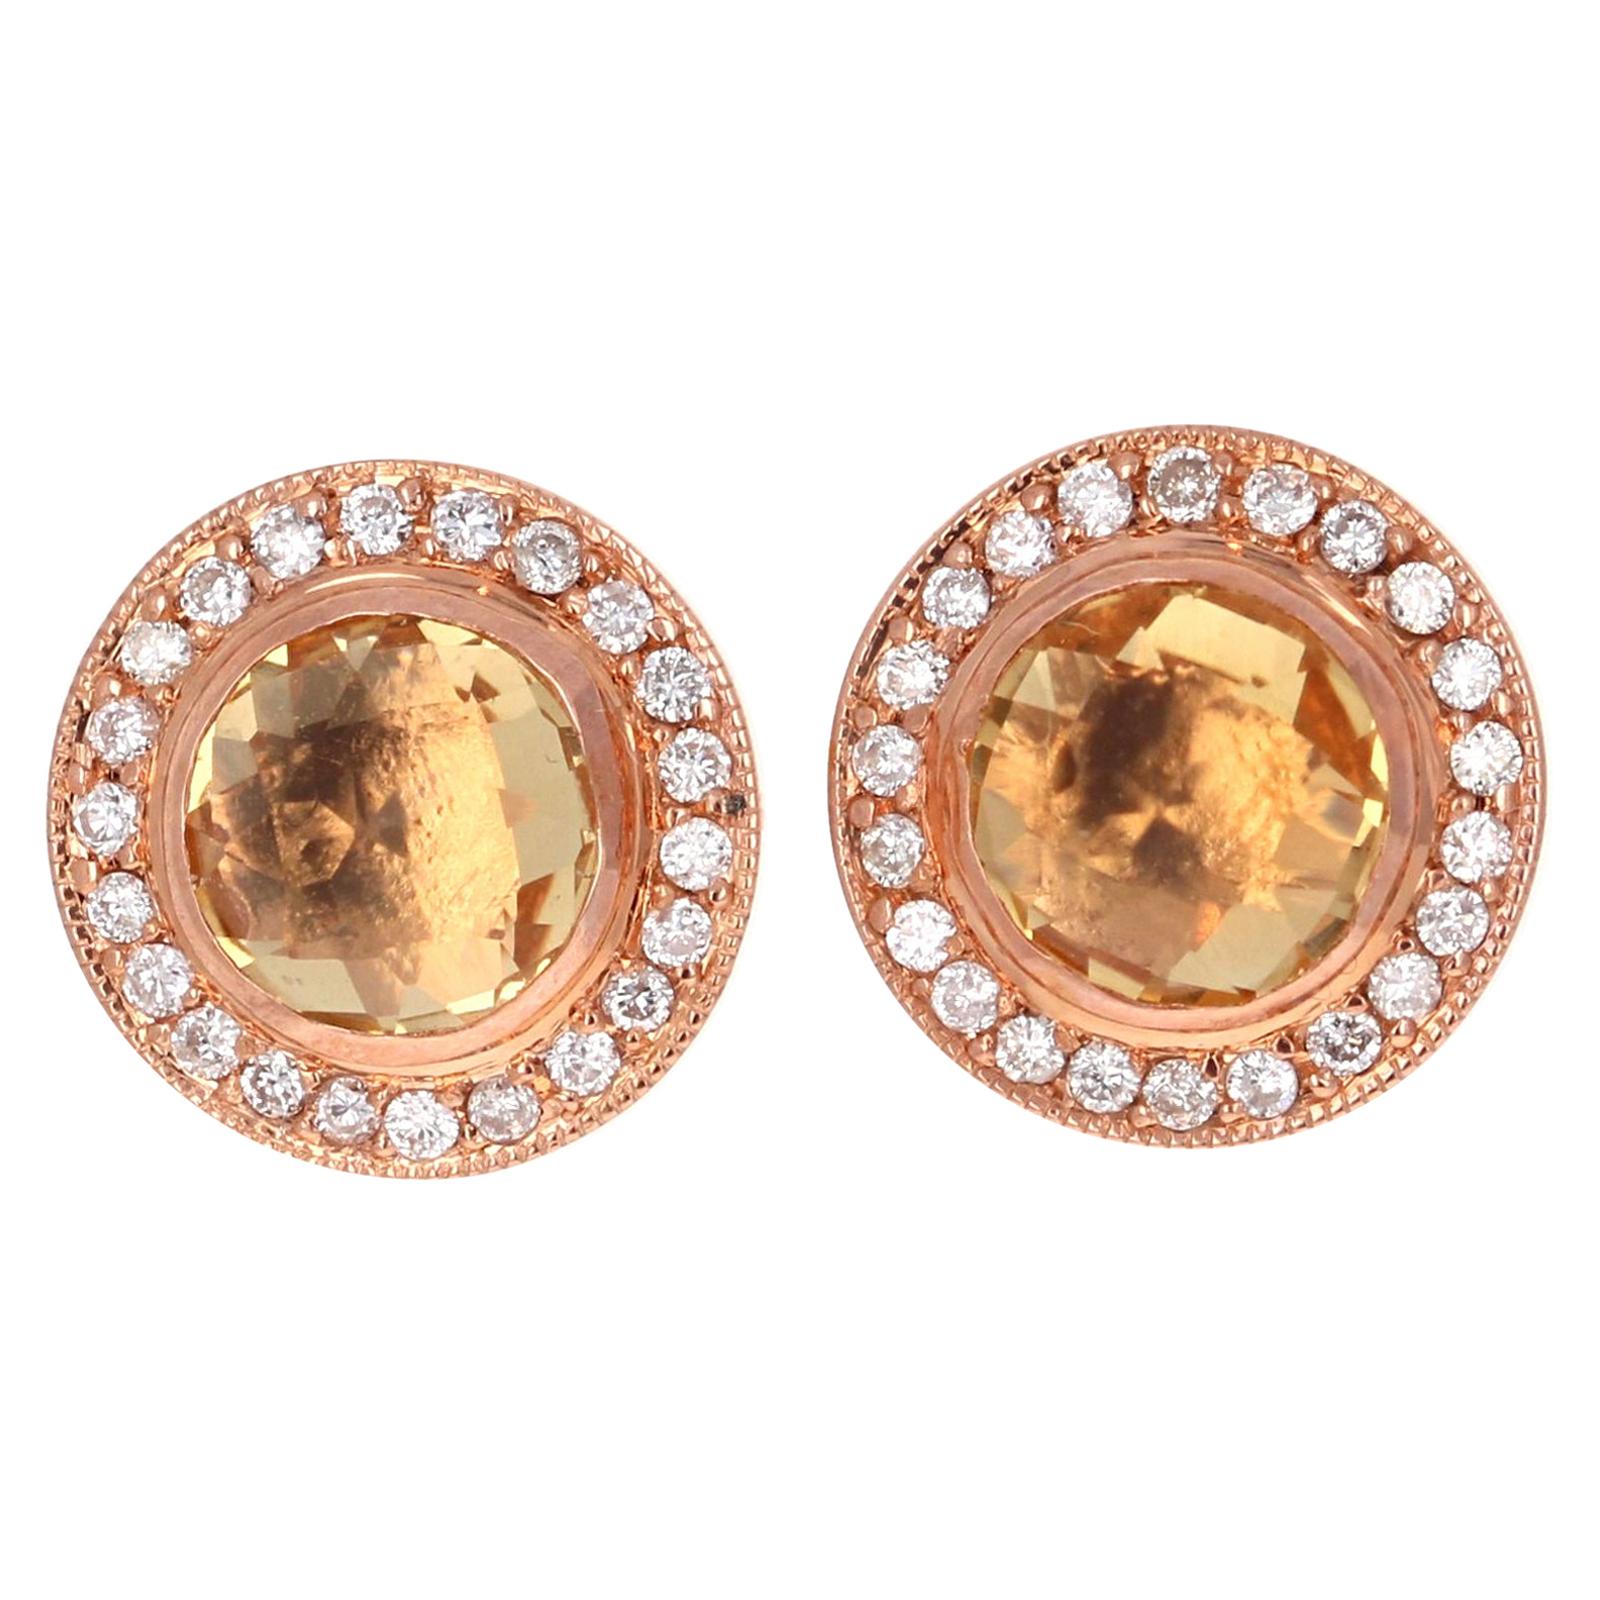 1.86 Carat Round Cut Citrine Diamond 14 Karat Rose Gold Earring Studs